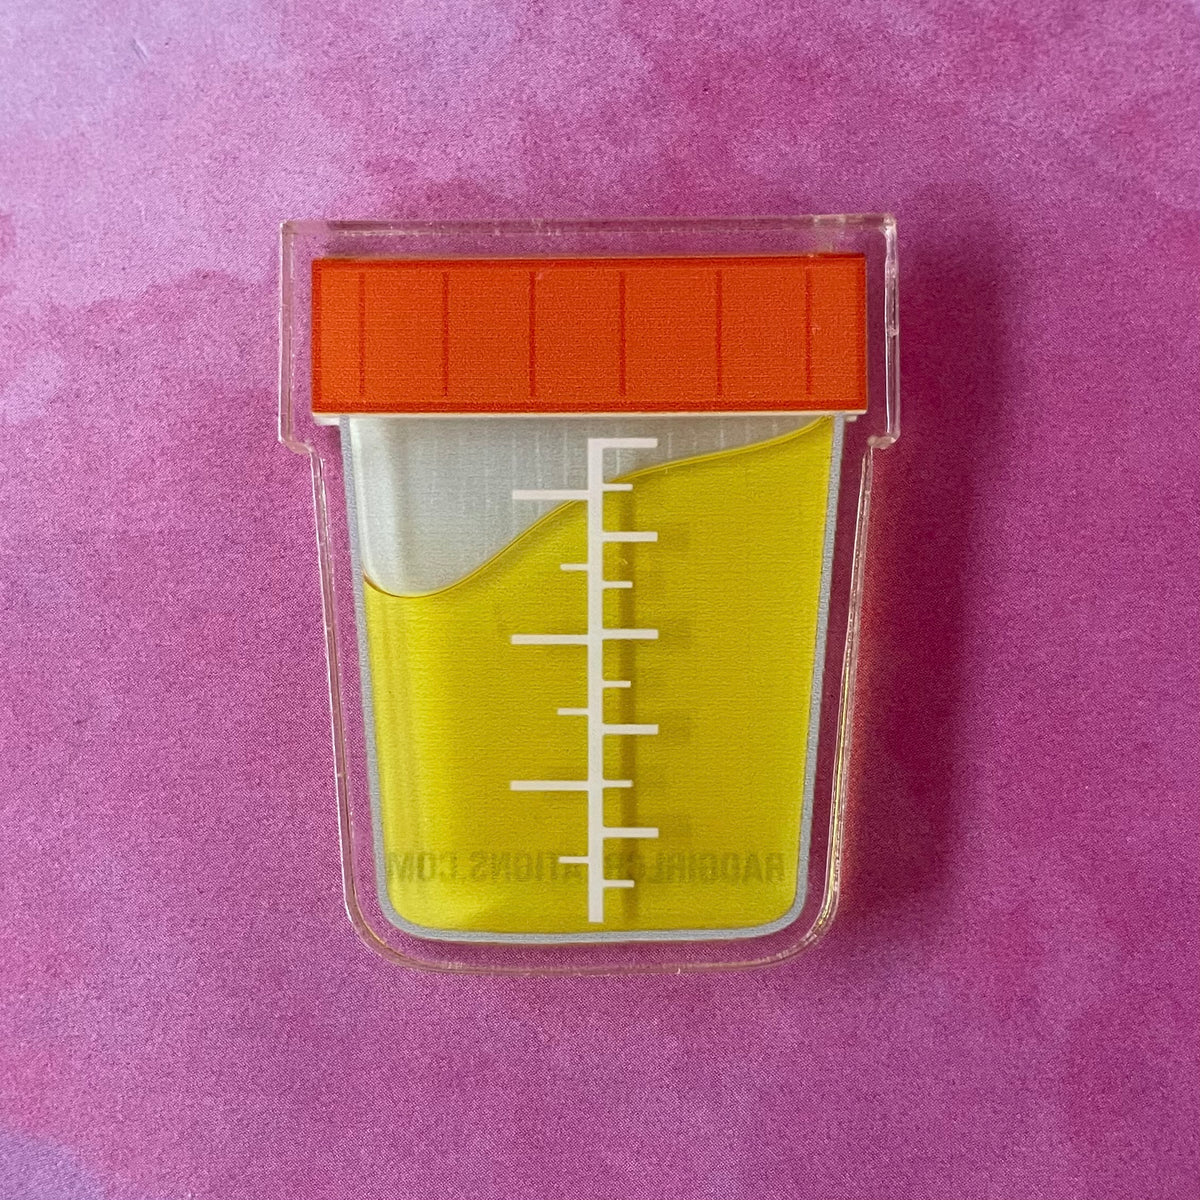 Specimen Cup - Liquid Filled Swappable Badge Reel Design TOP